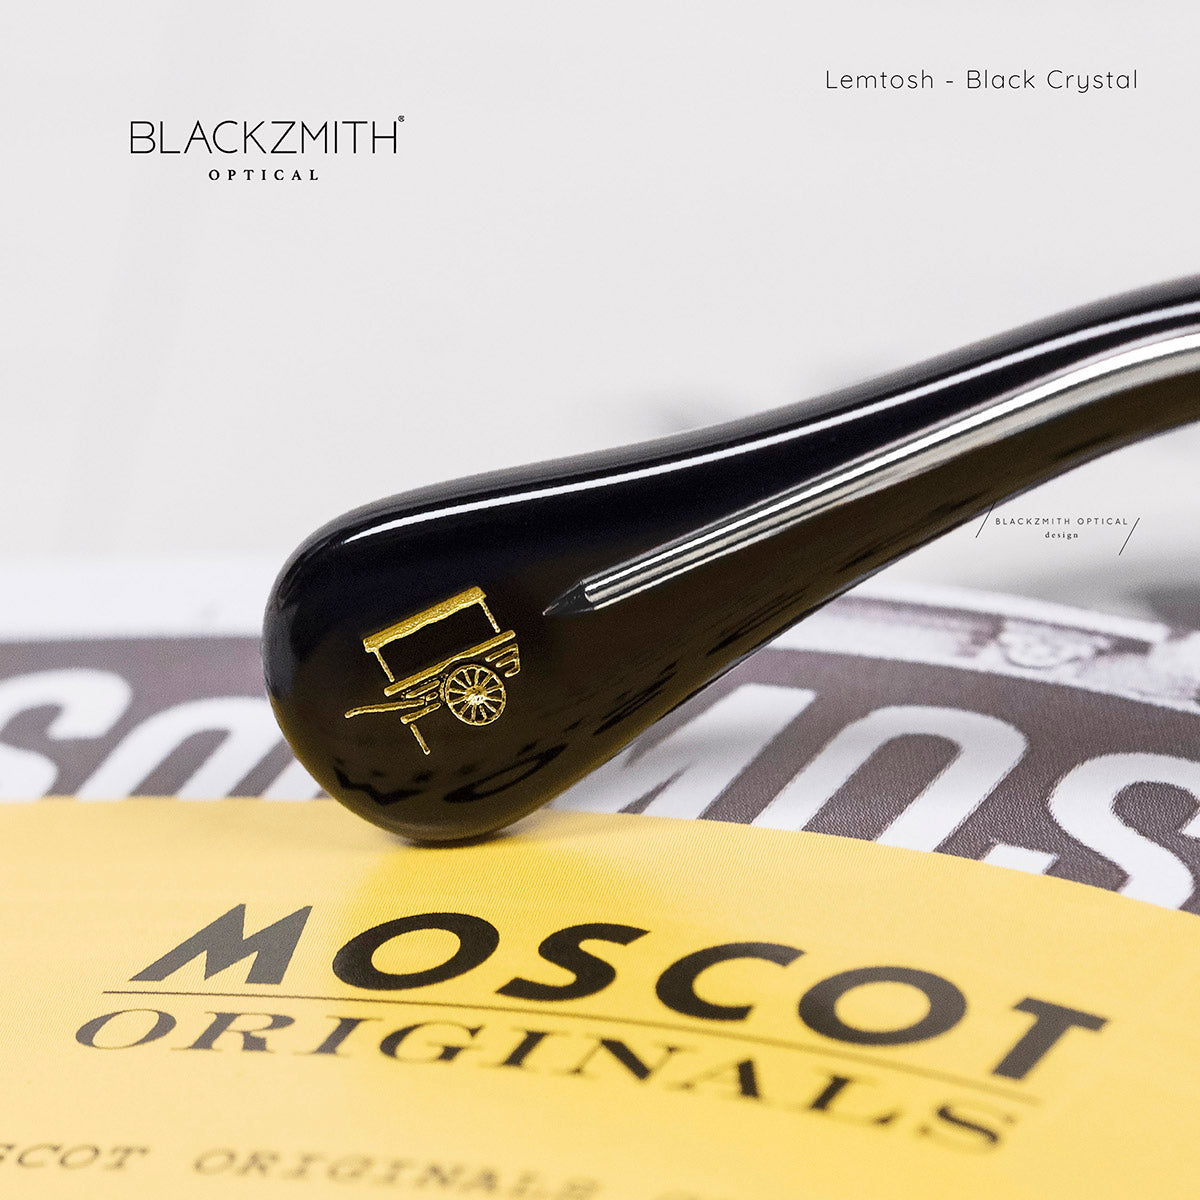 Moscot - Lemtosh Black Crystal